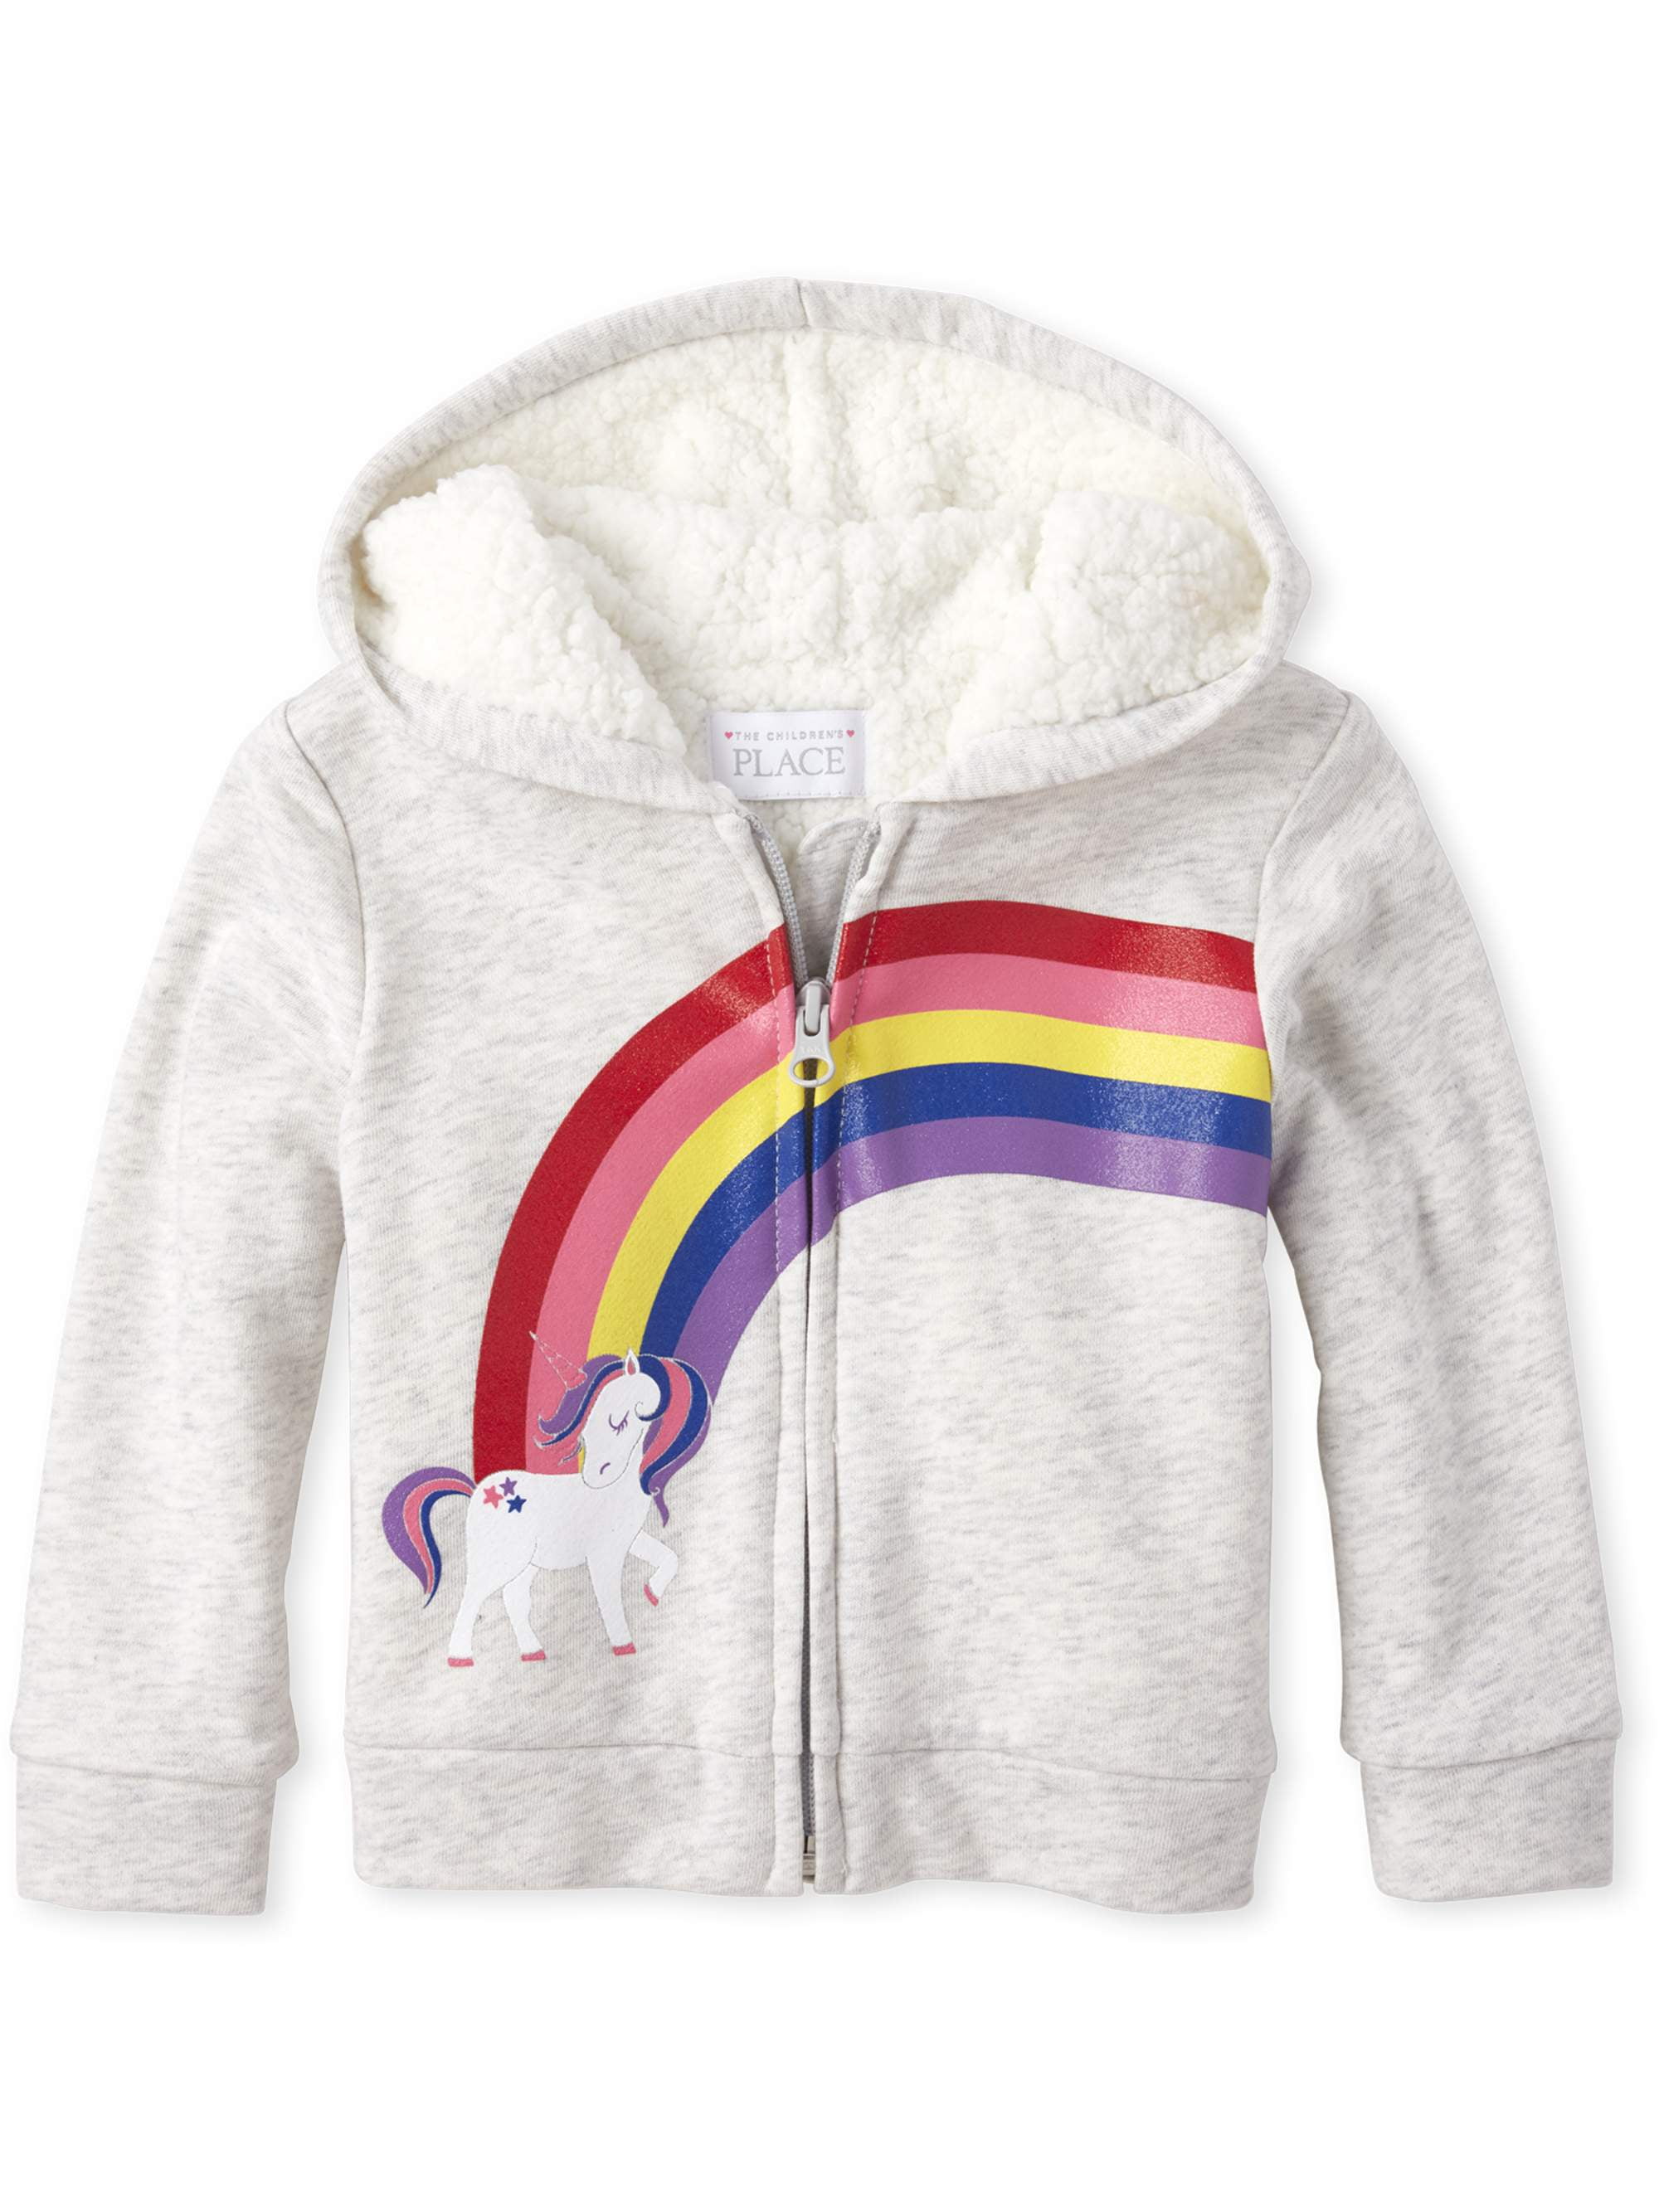 kids hoodies Youth  Hooded Sweatshirt animal lover rainbow hoodies Unicorn Horse tees